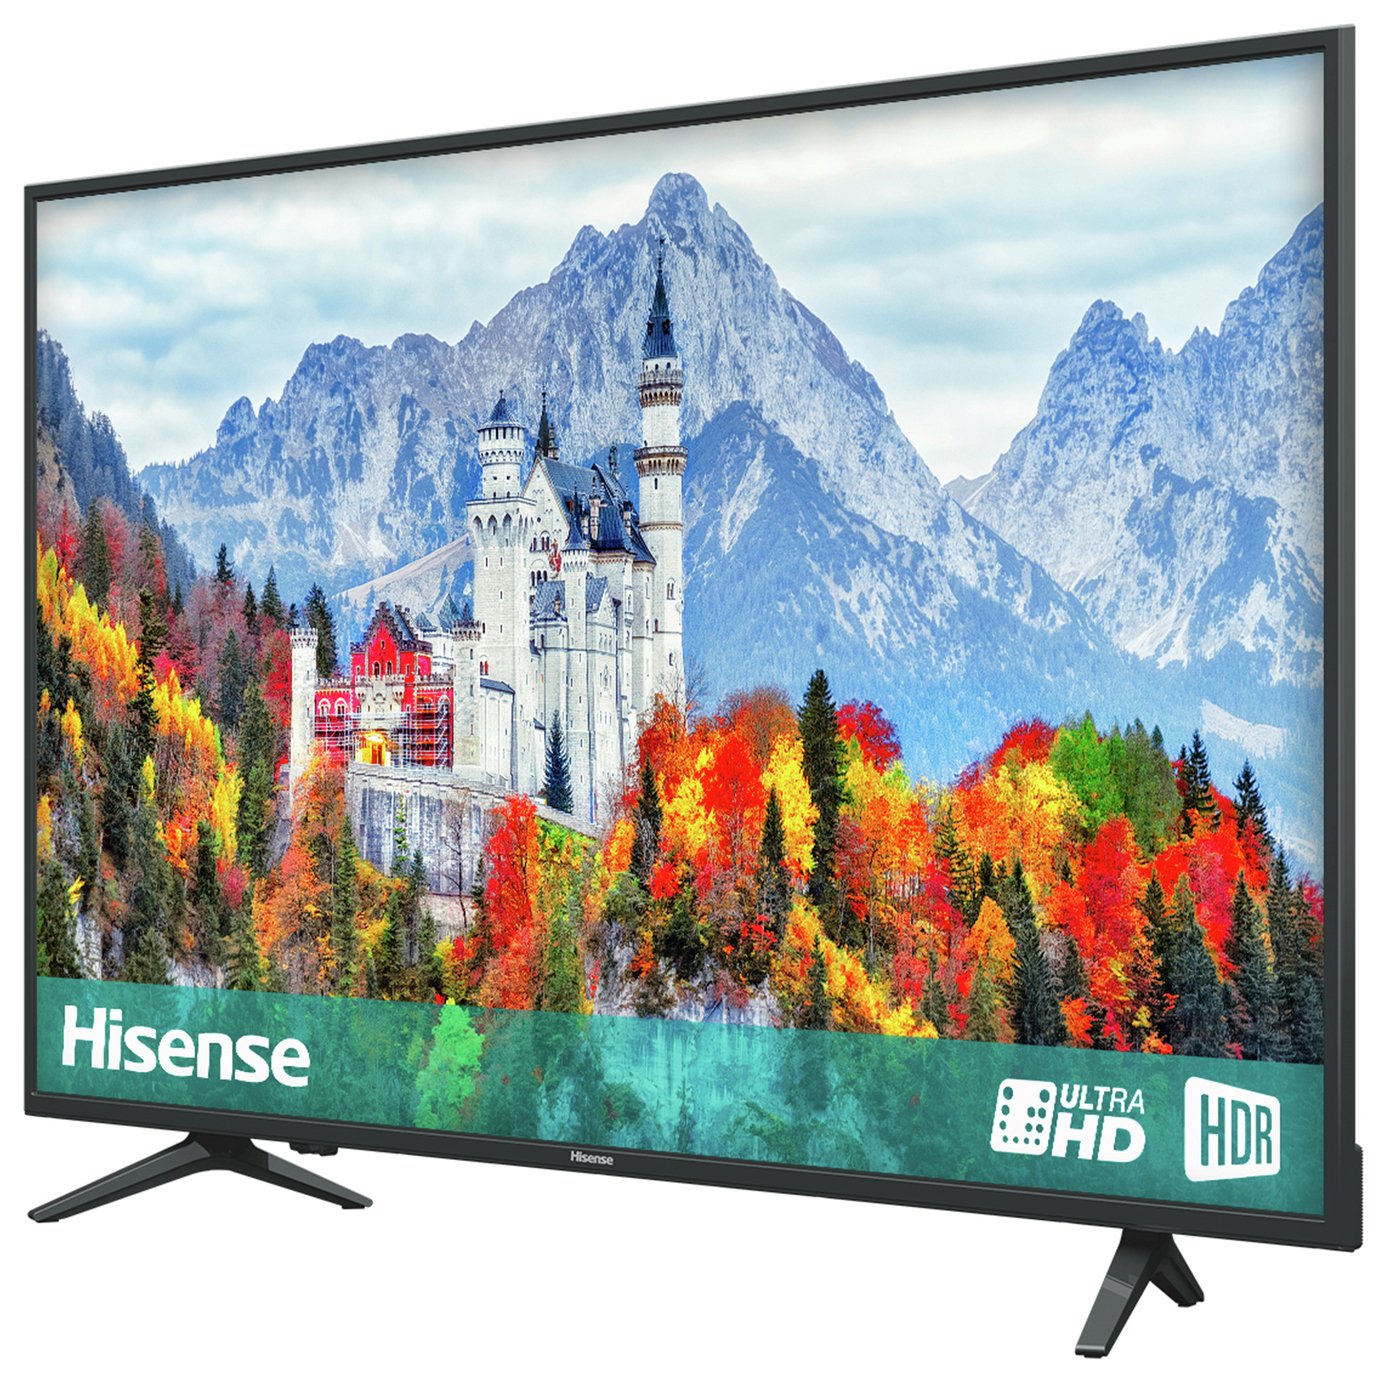 Hisense 43 Inch H43A6250UK Smart 4K HDR LED TV Review